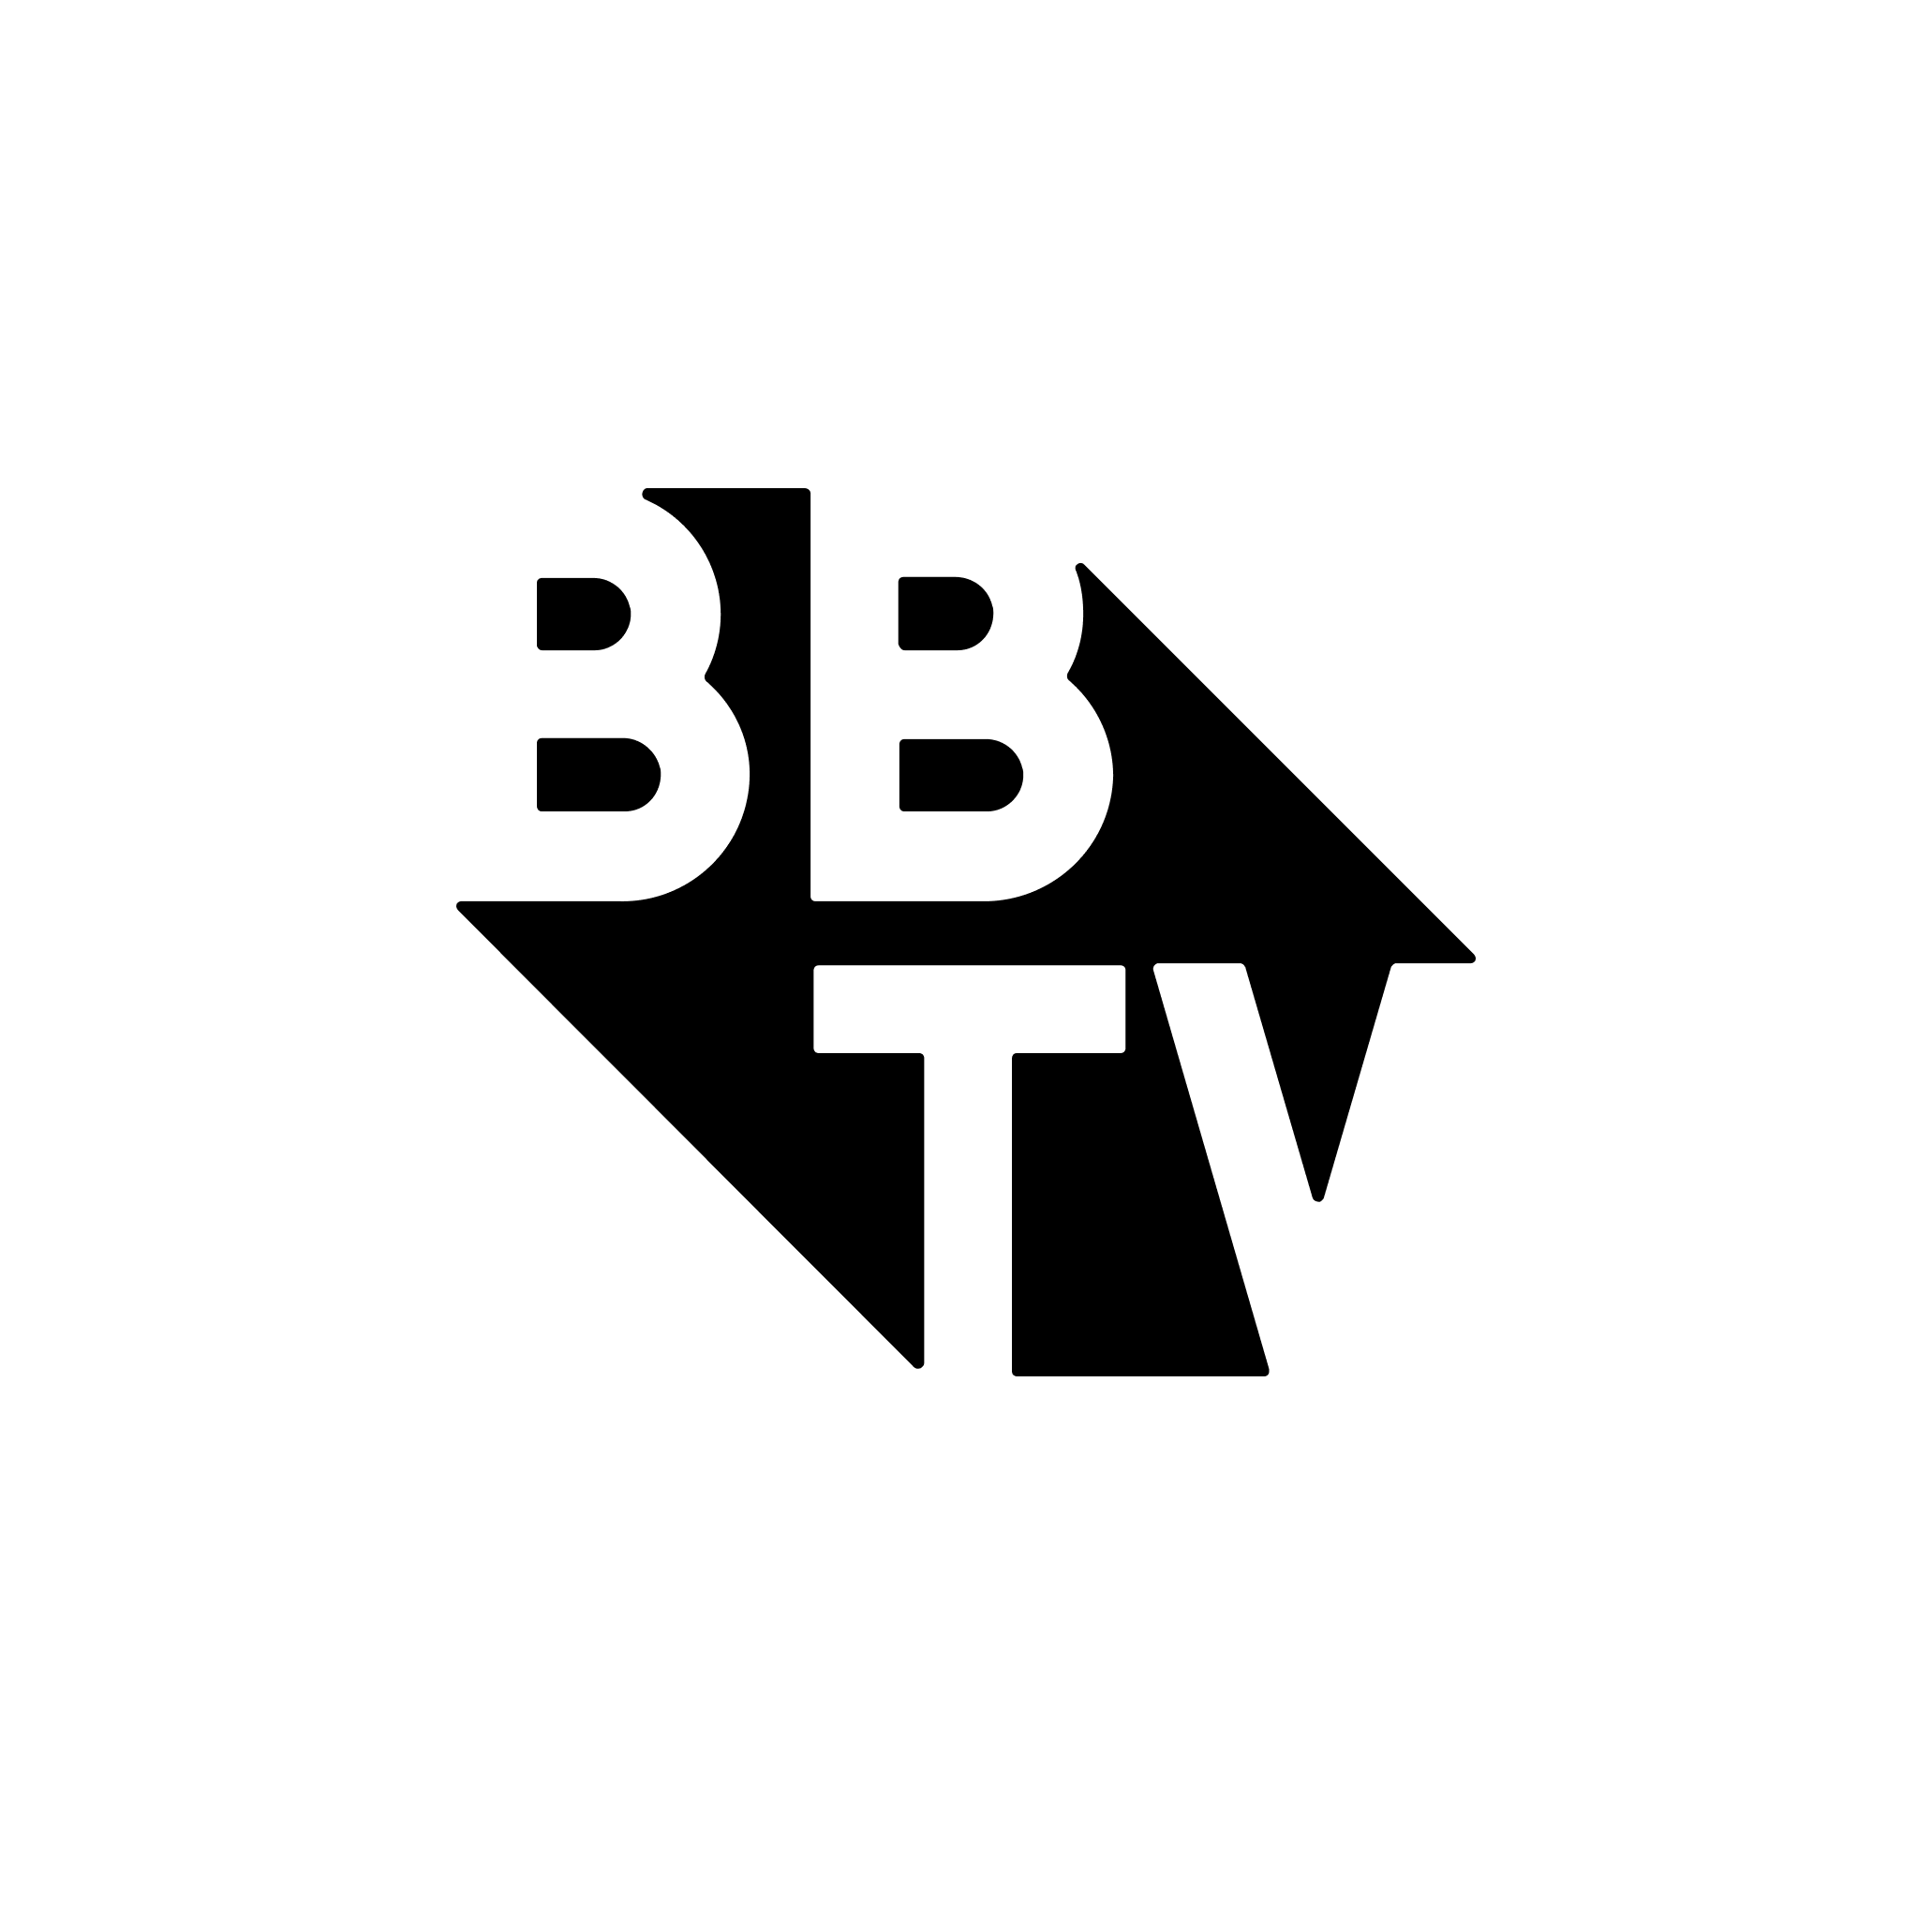 BBTV Logo